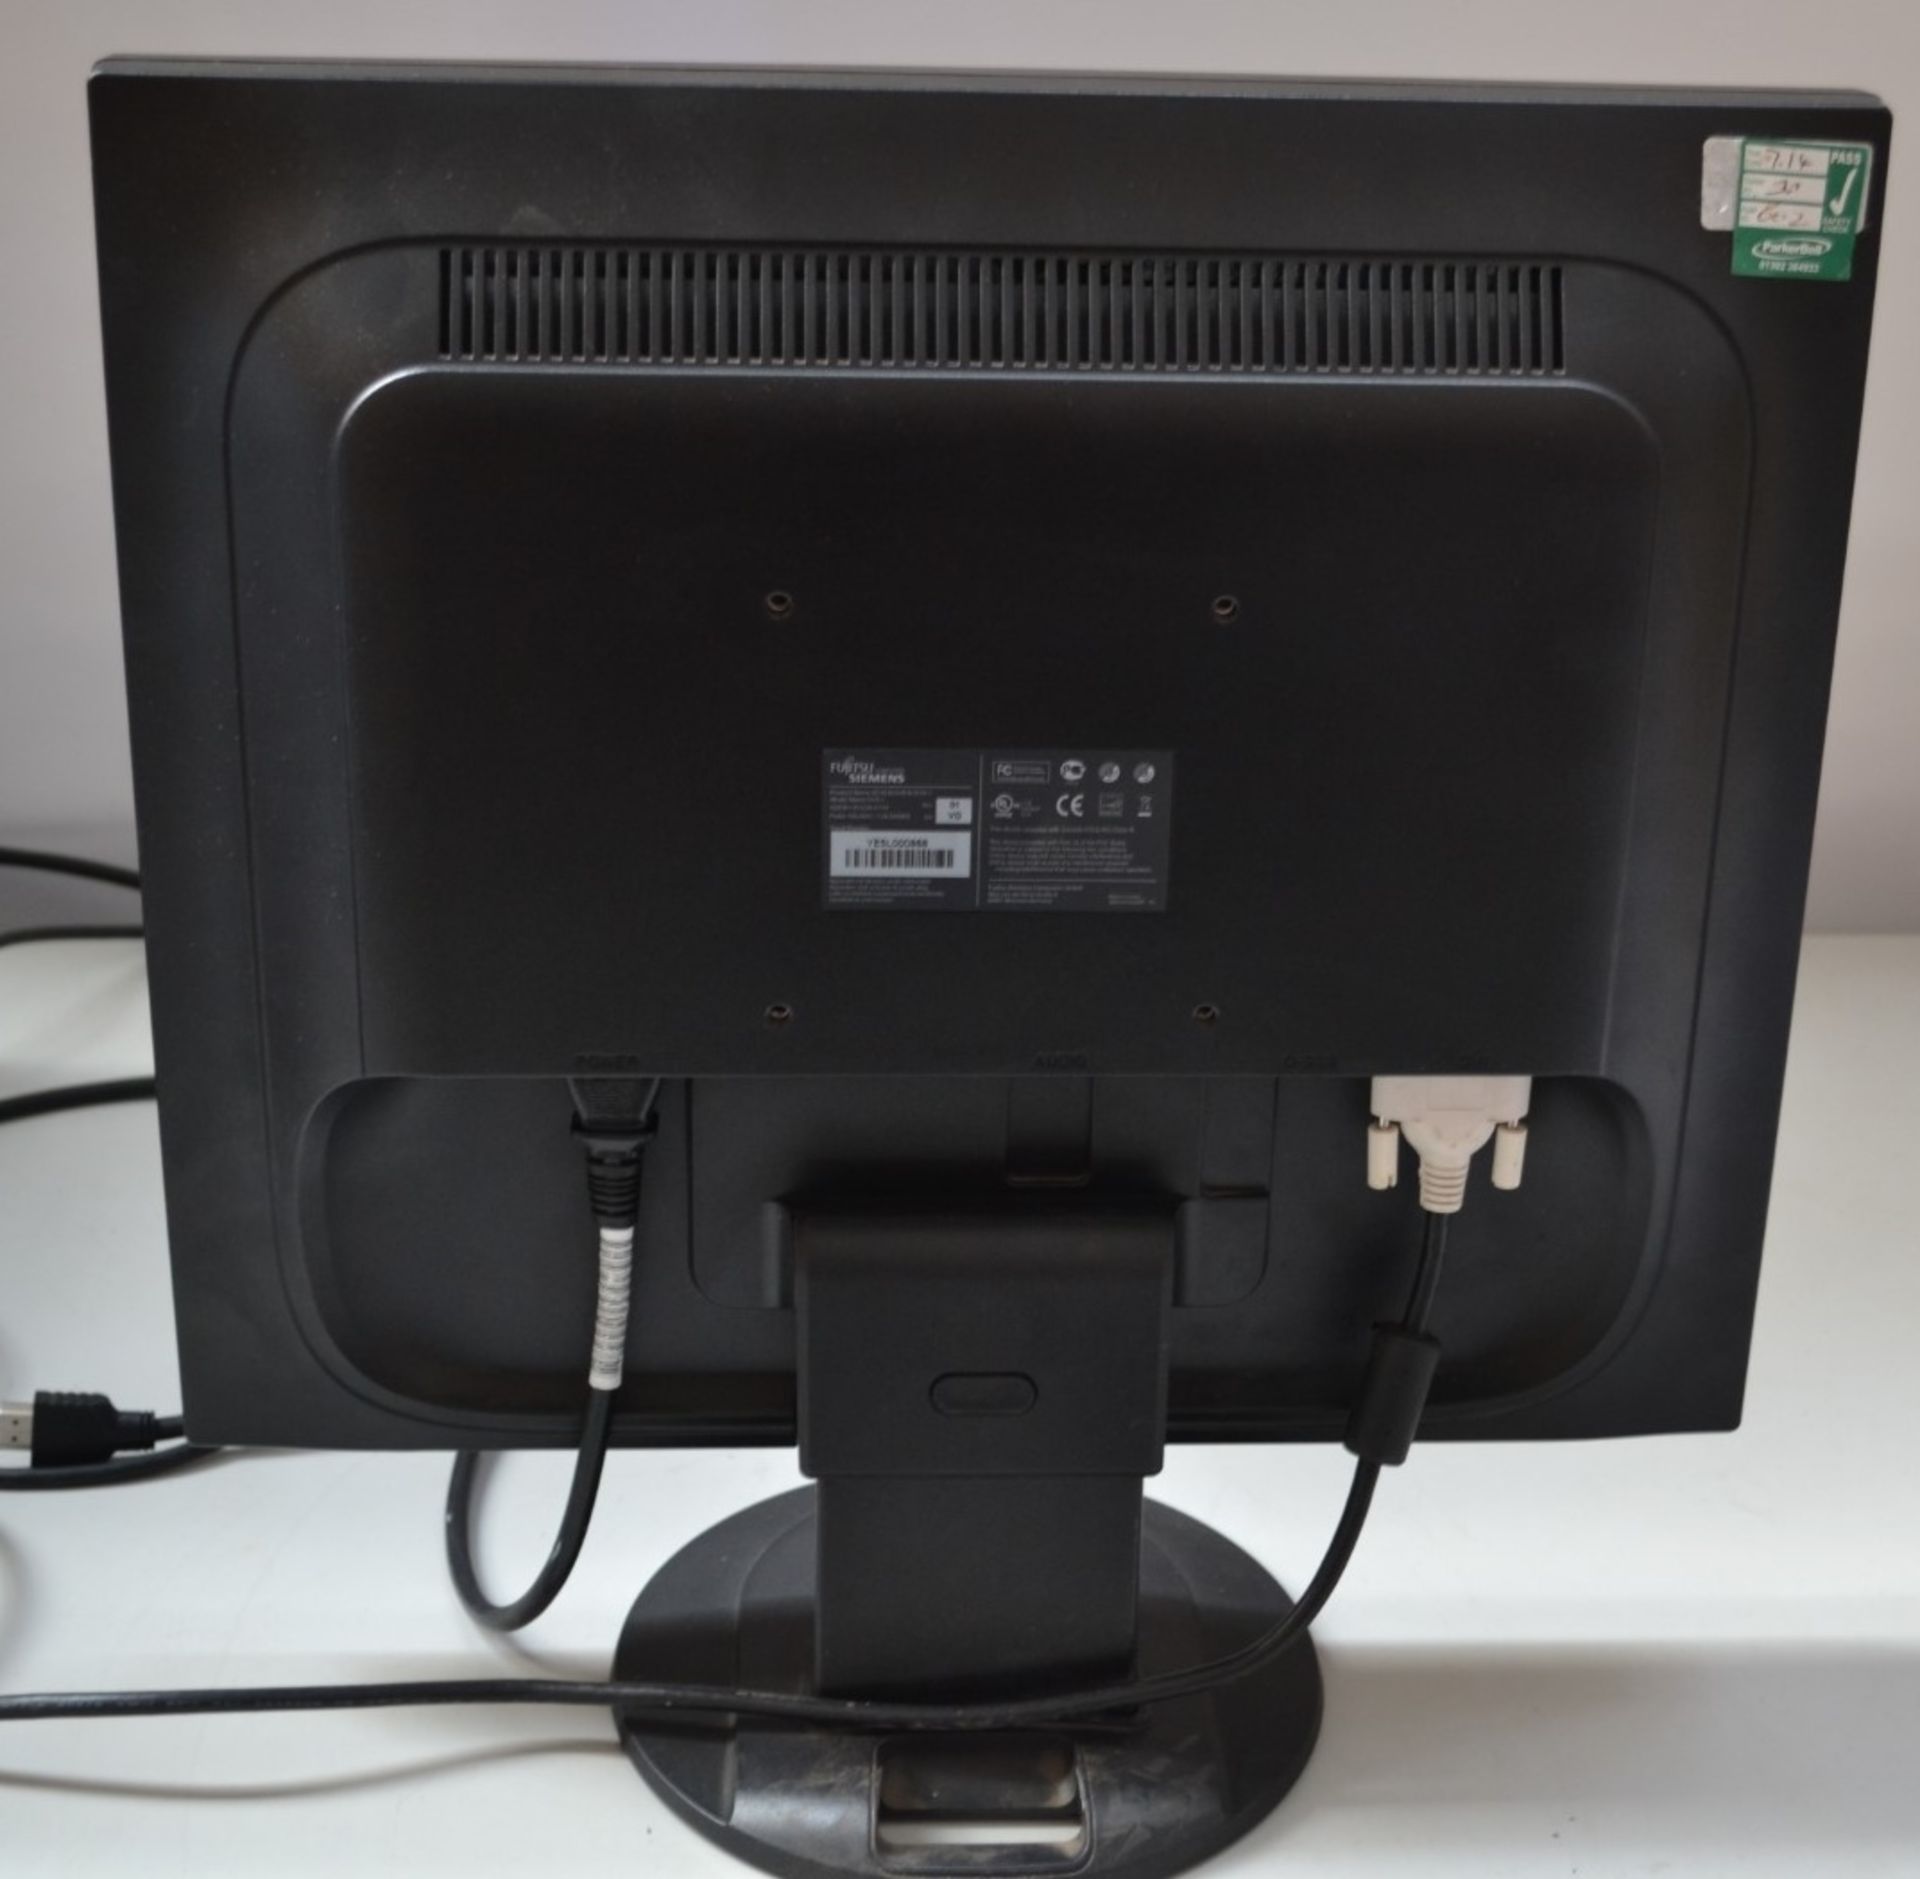 1 x Fujitsu ScaleoView D19-1 19 inch PC Monitor TFT LCD - Ref J2263 - Image 2 of 3